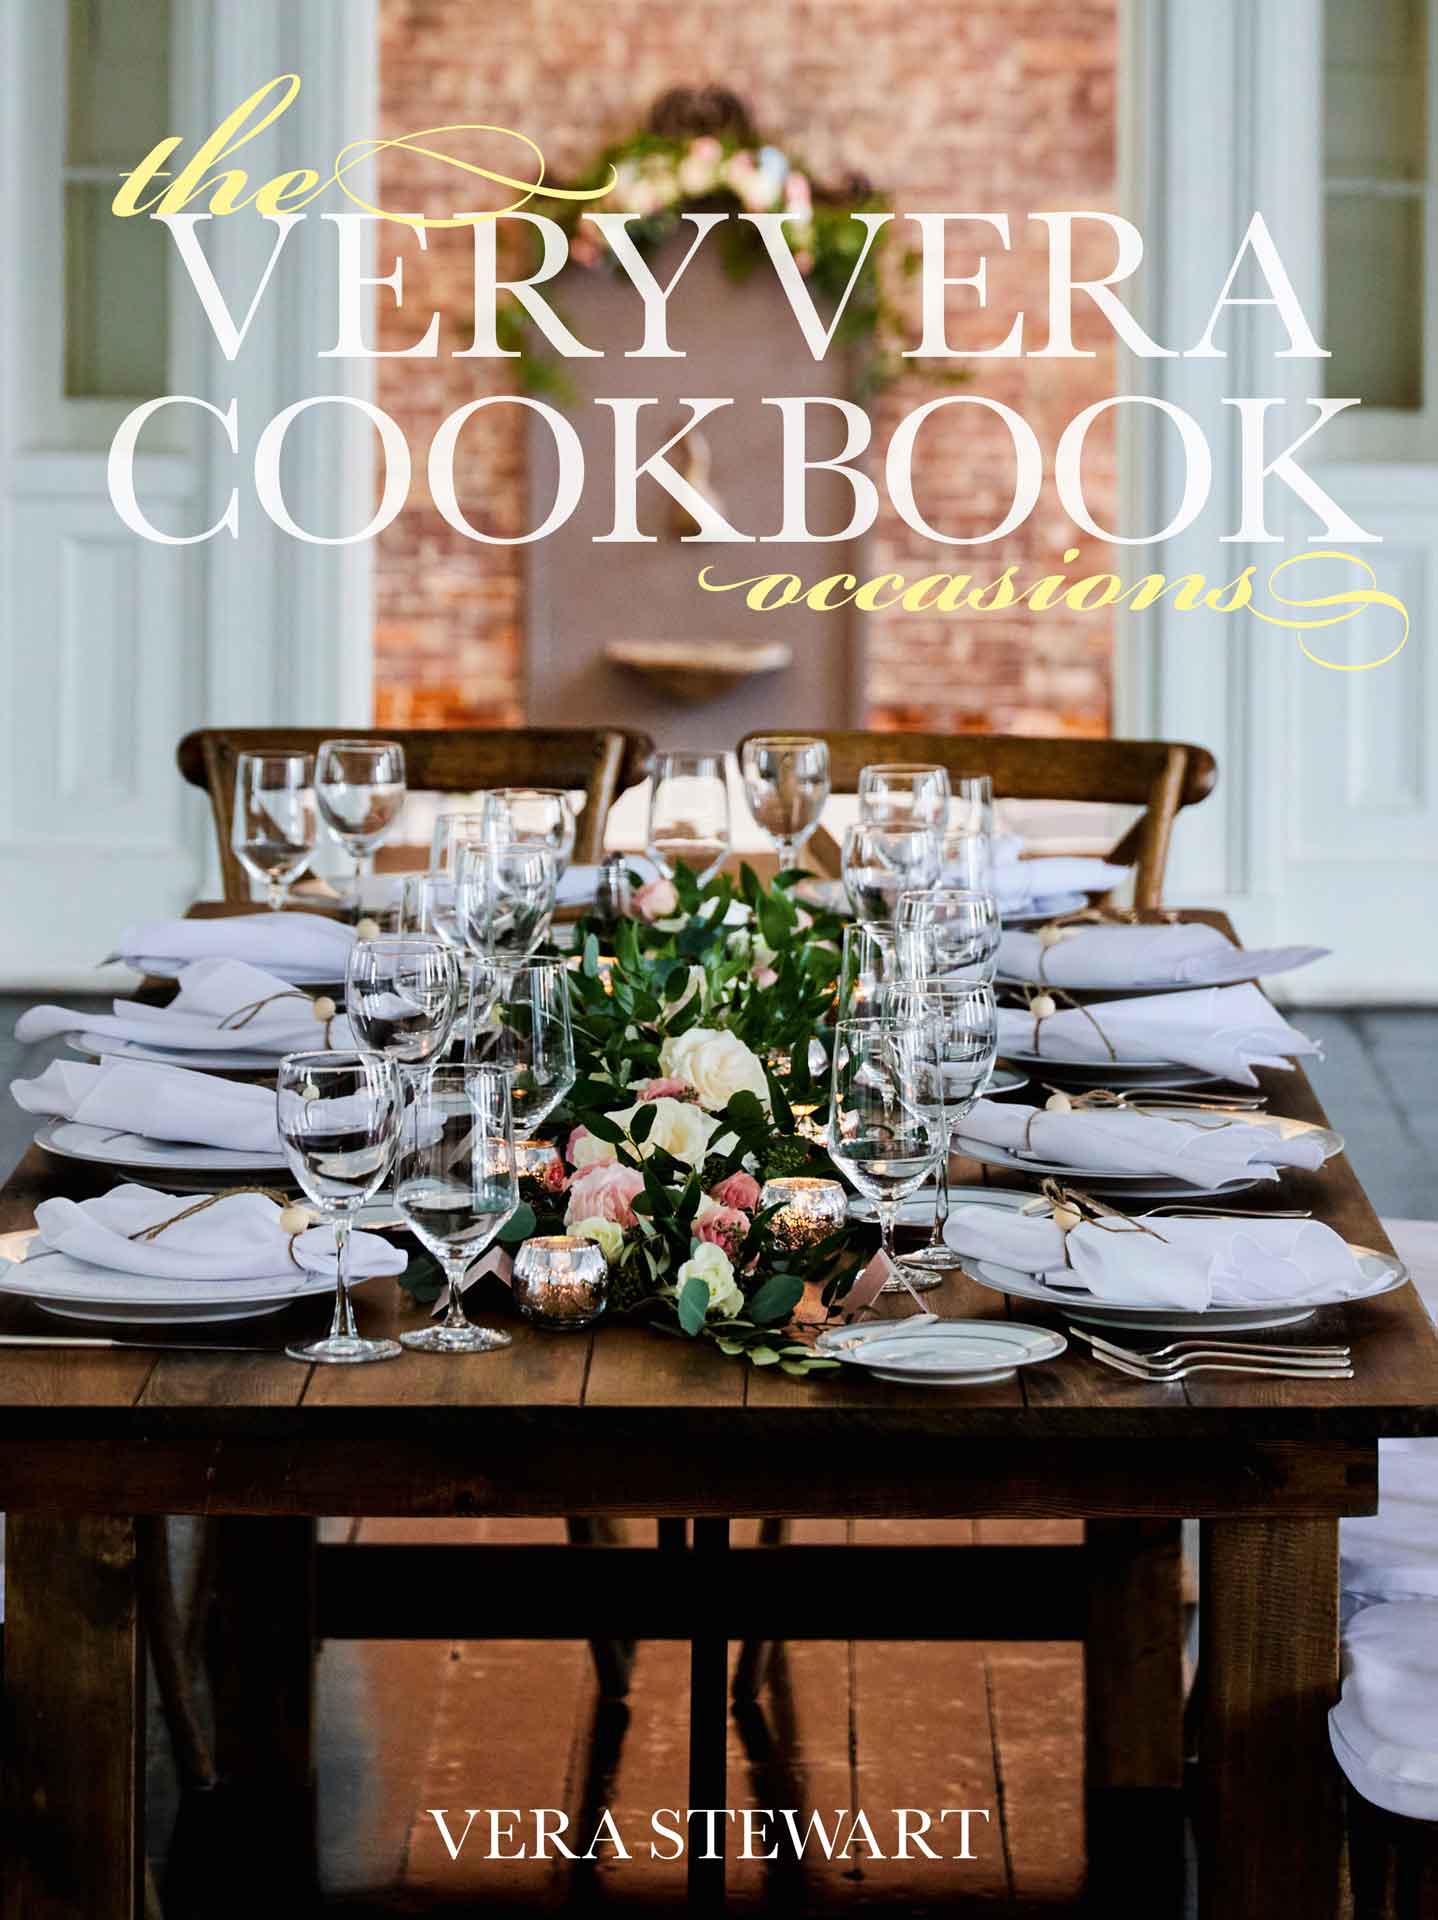 The VeryVera Cookbook: Occasions - Hardcover